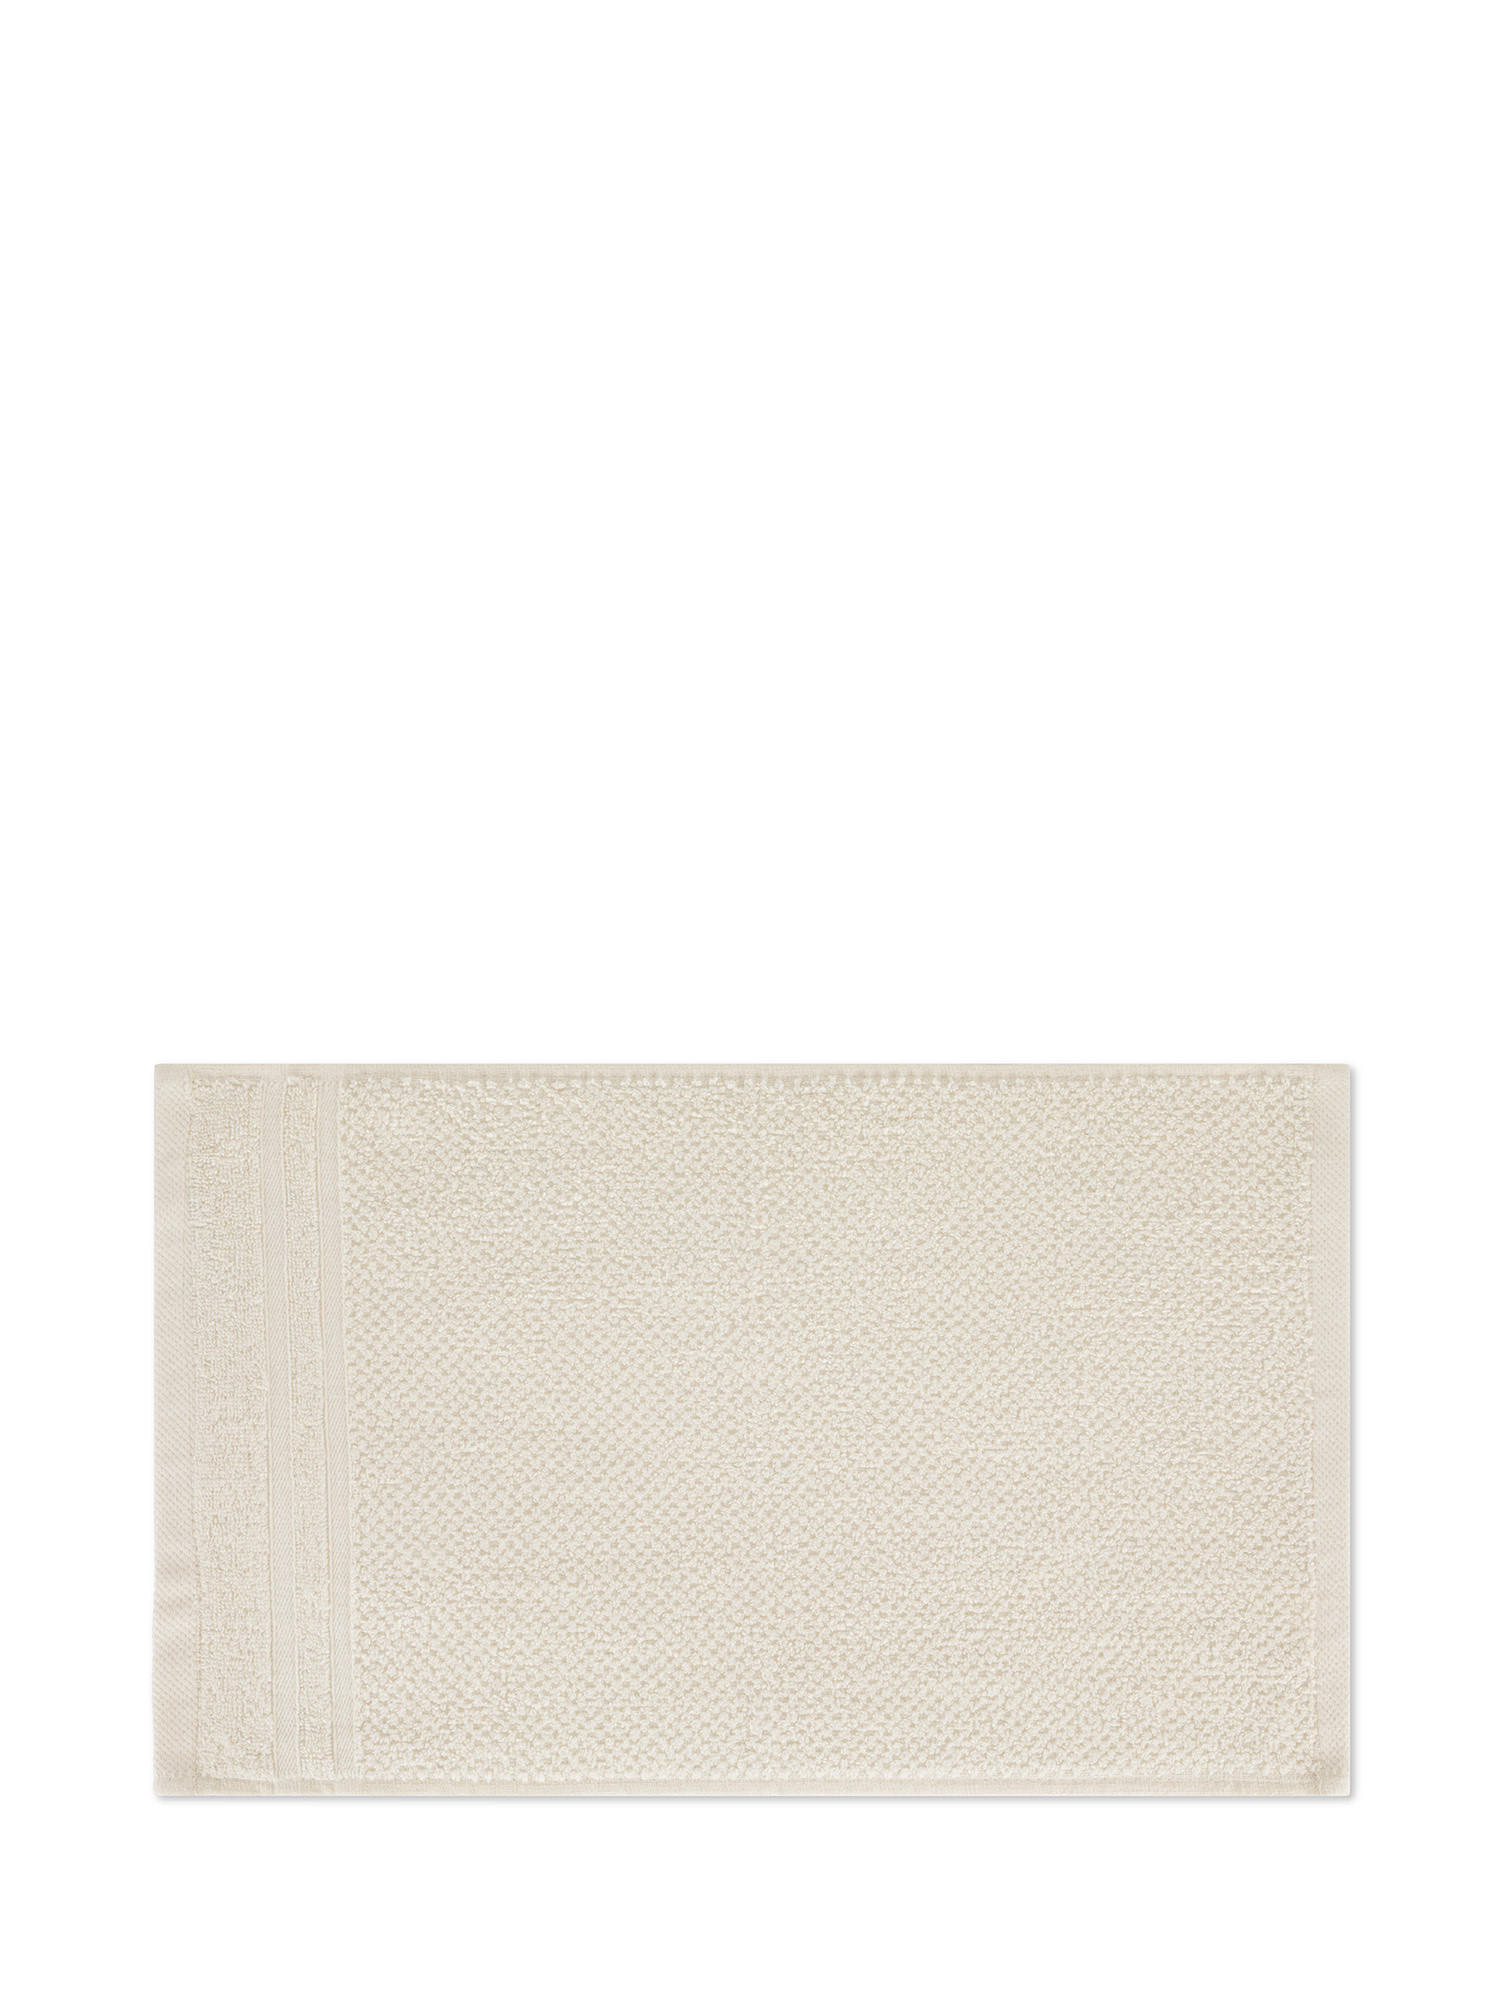 Set 5 asciugamani in spugna di cotone, Bianco, large image number 1